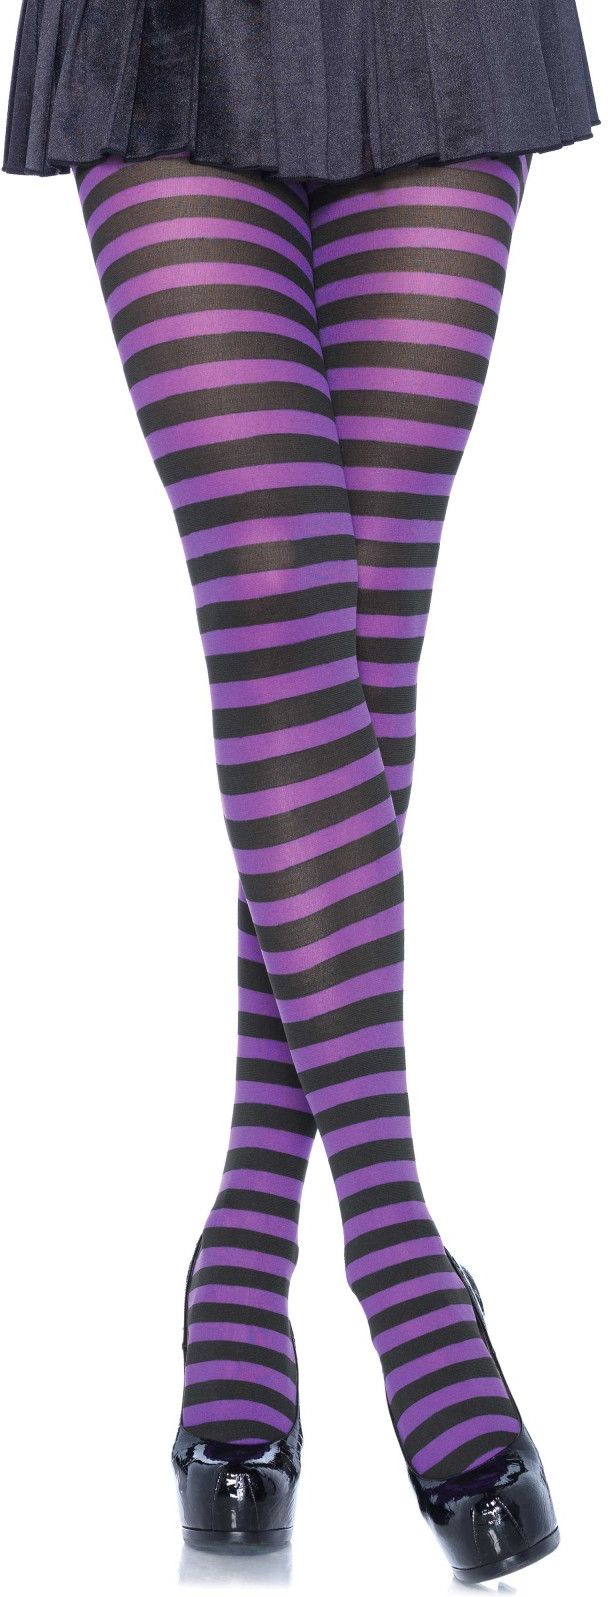 Zwart paarse nylon gestreepte panty